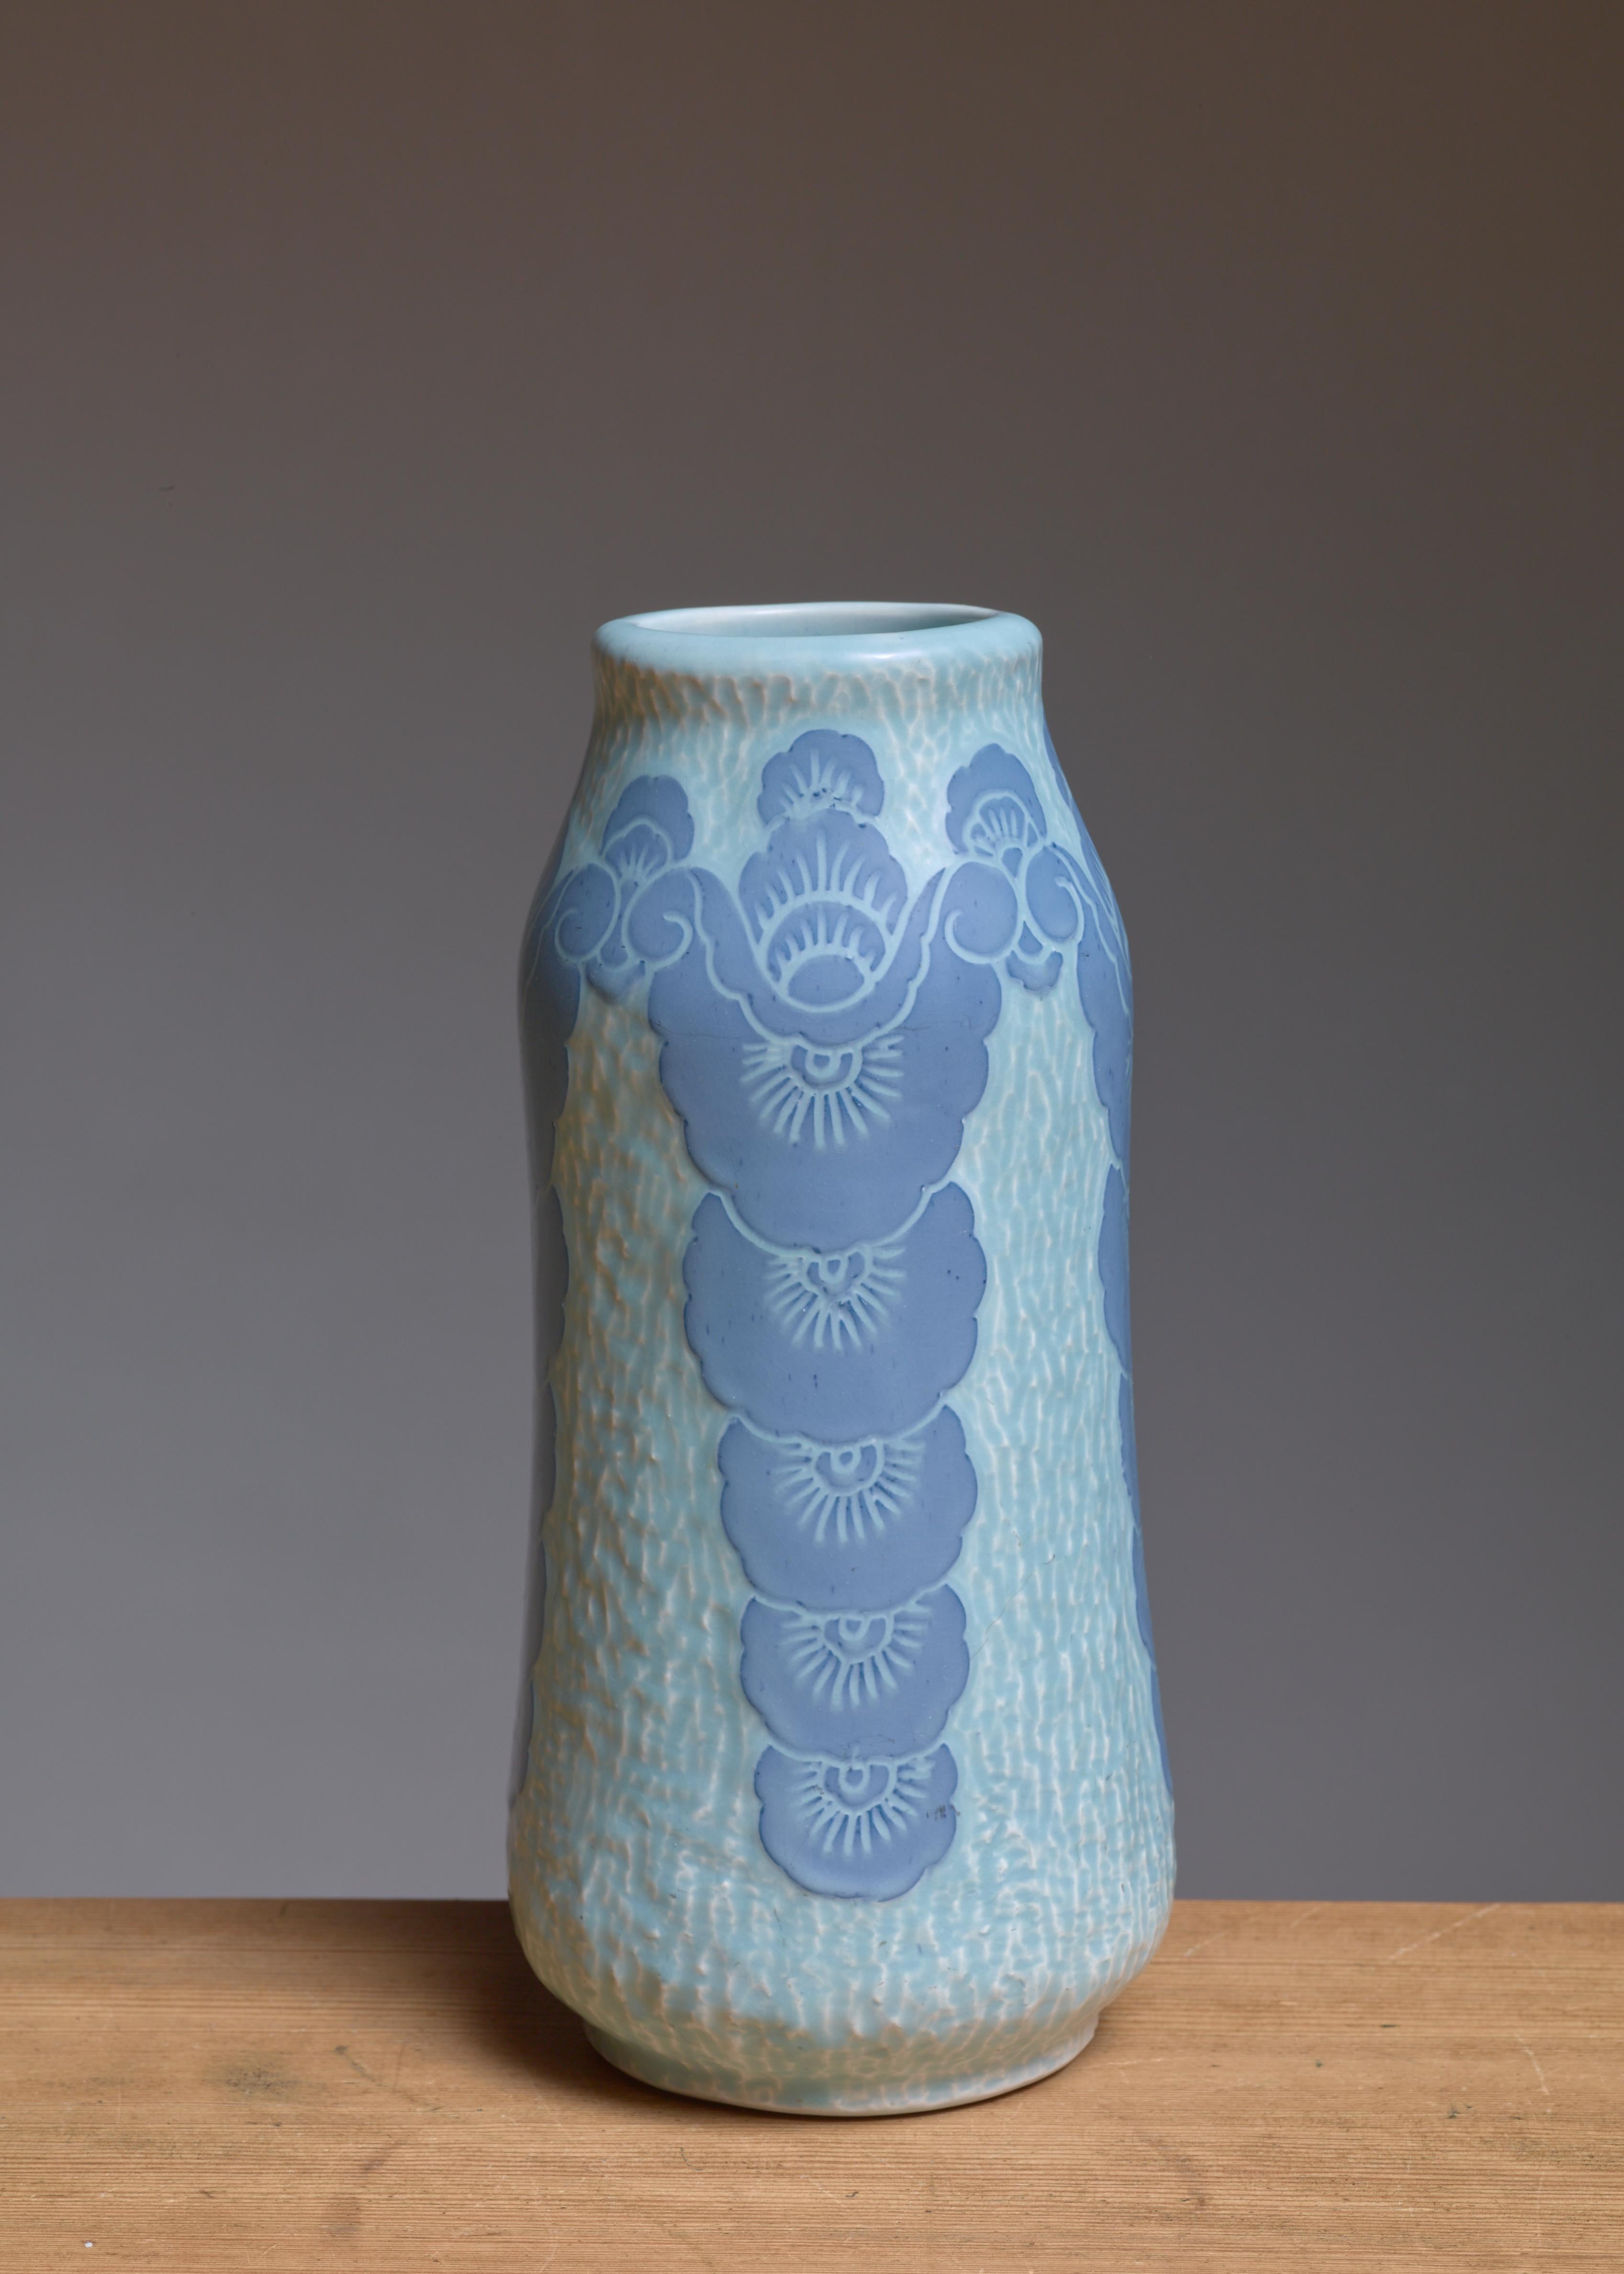 A ceramic vase by Swedish artist Josef Ekberg (1877-1945) for Gustavsberg. The vase has a blue glaze finish with a Sgraffito flower motif.